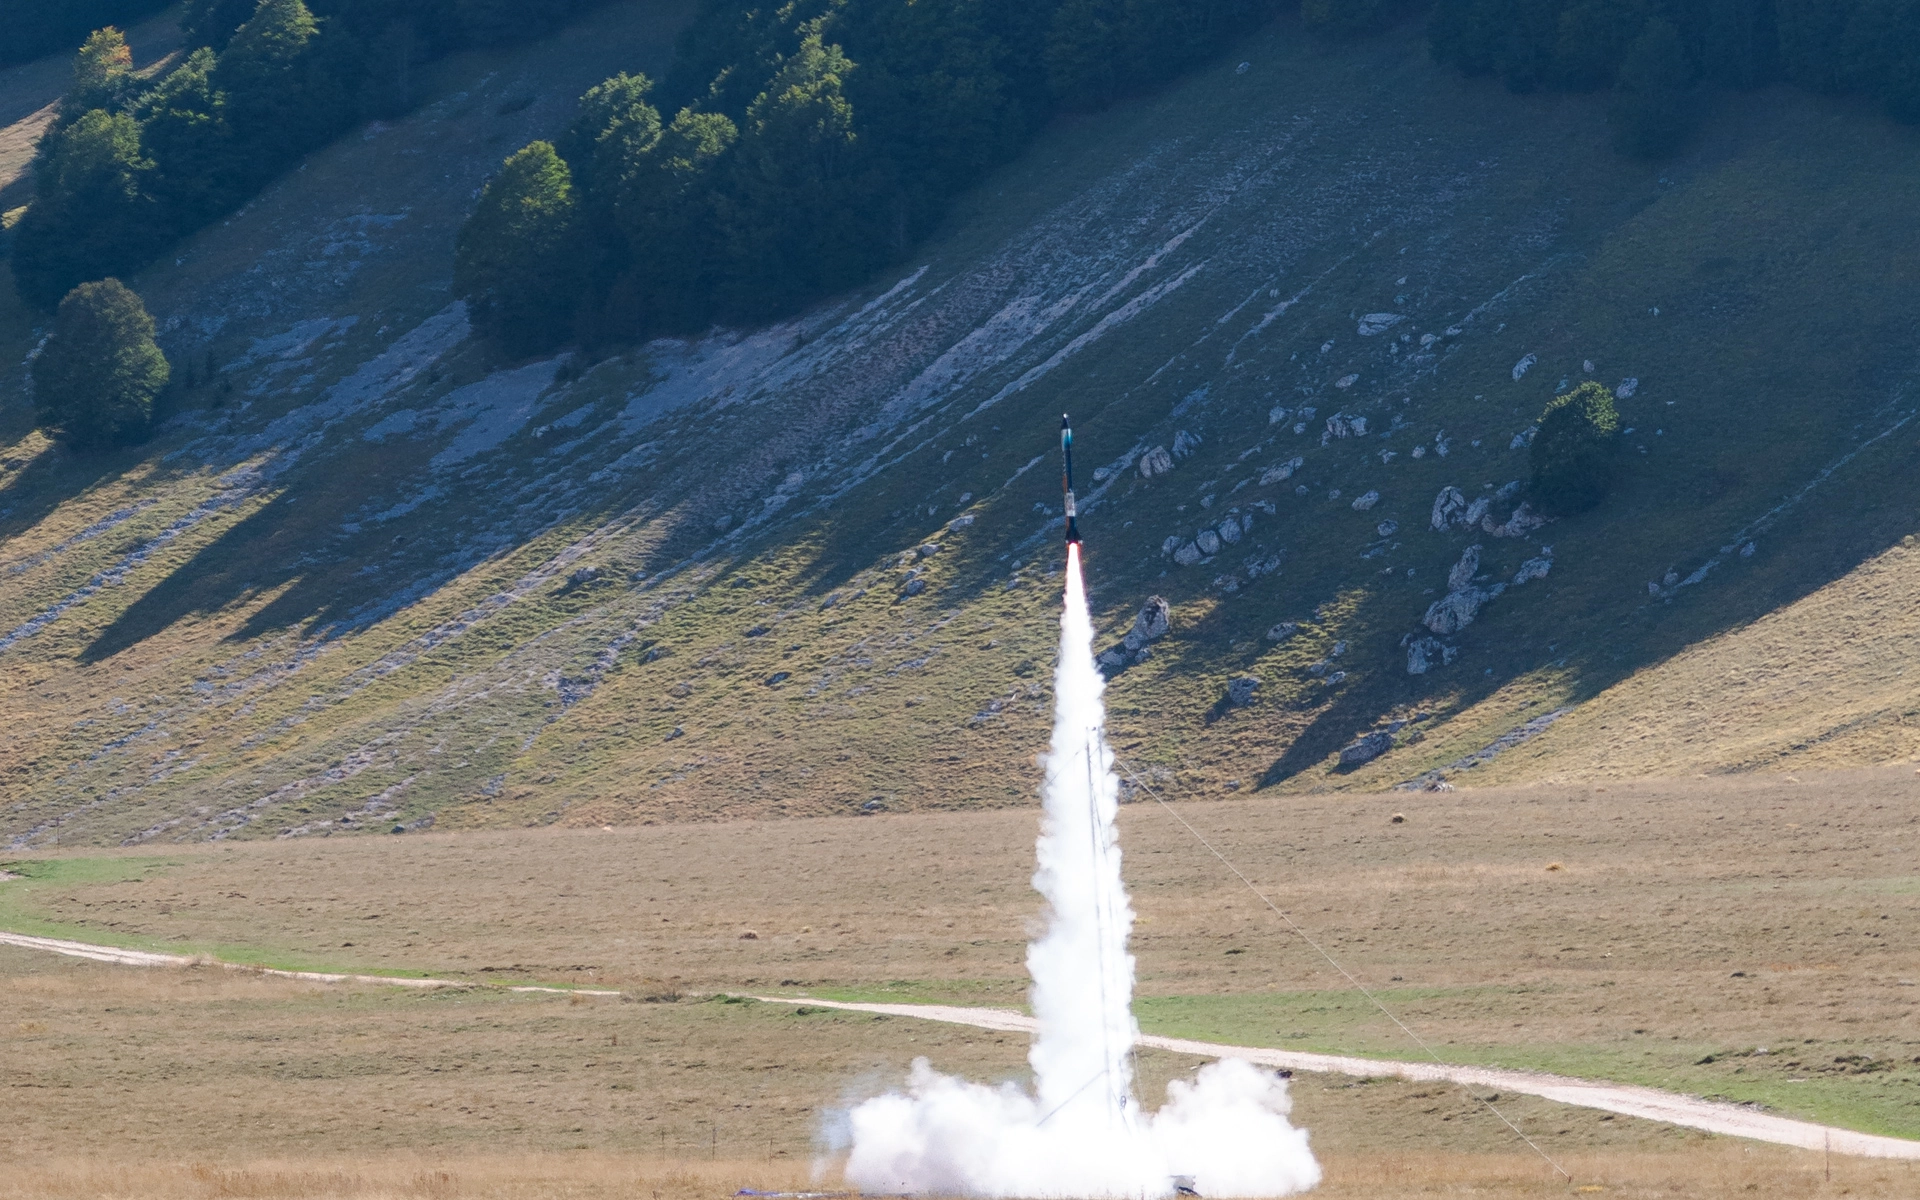 Test launch in Roccaraso (🇮🇹). © Skyward Experimental Rocketry, 2021